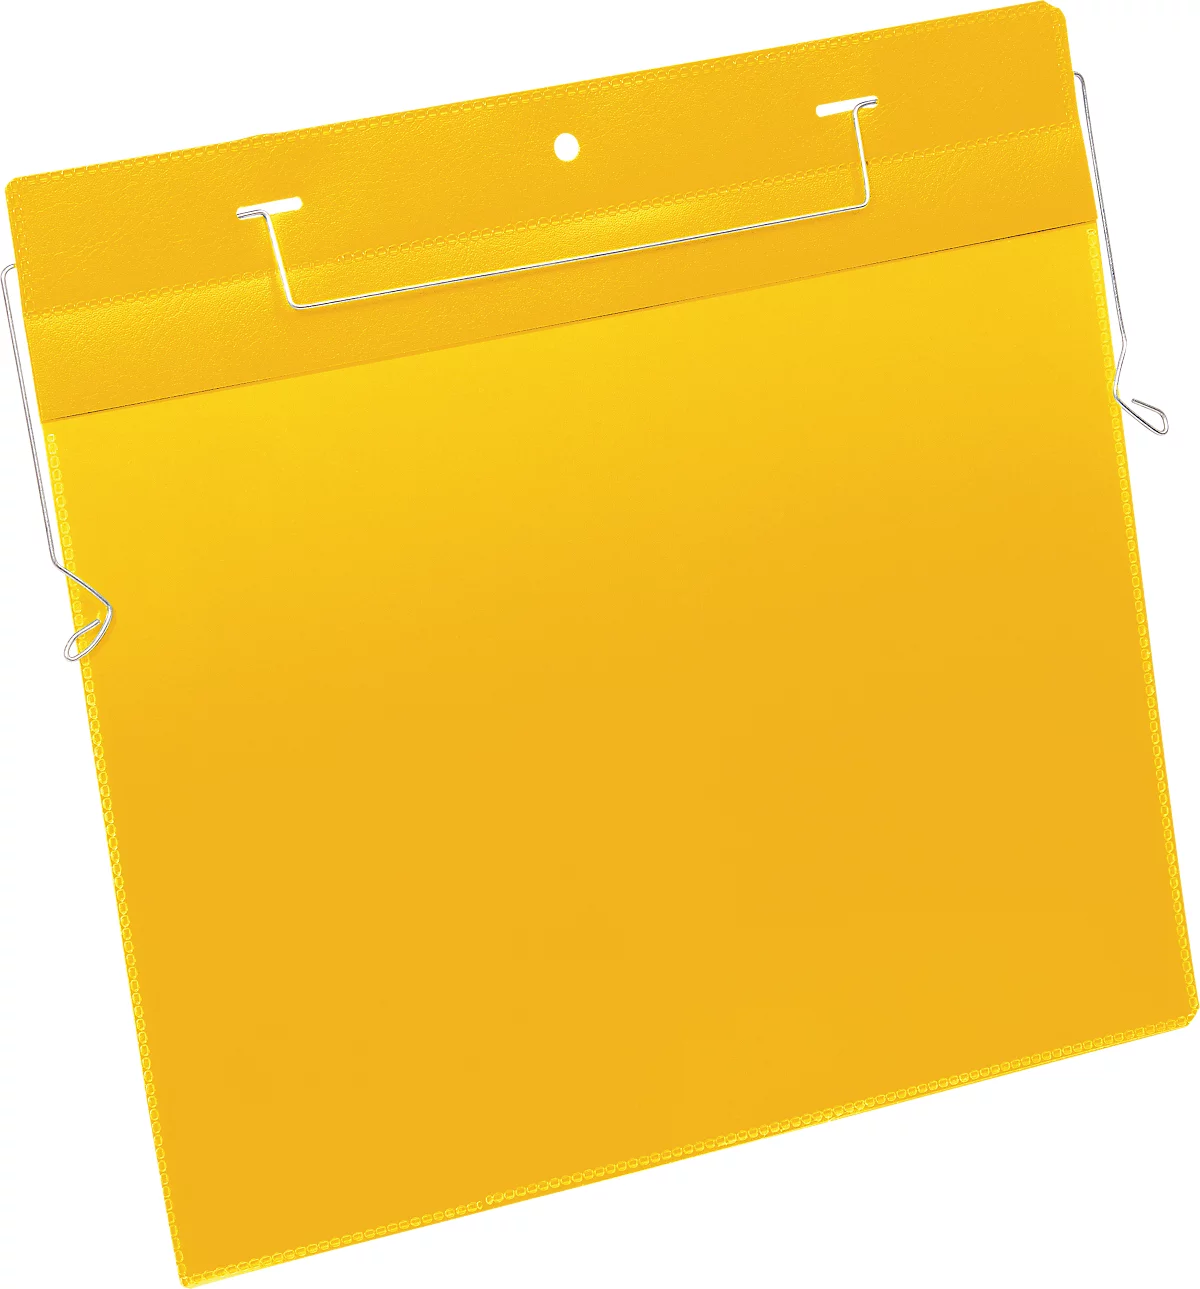 Dokumententaschen mit Drahtbügel, B 297 x H 210 mm (A4 quer), 50 Stück, gelb